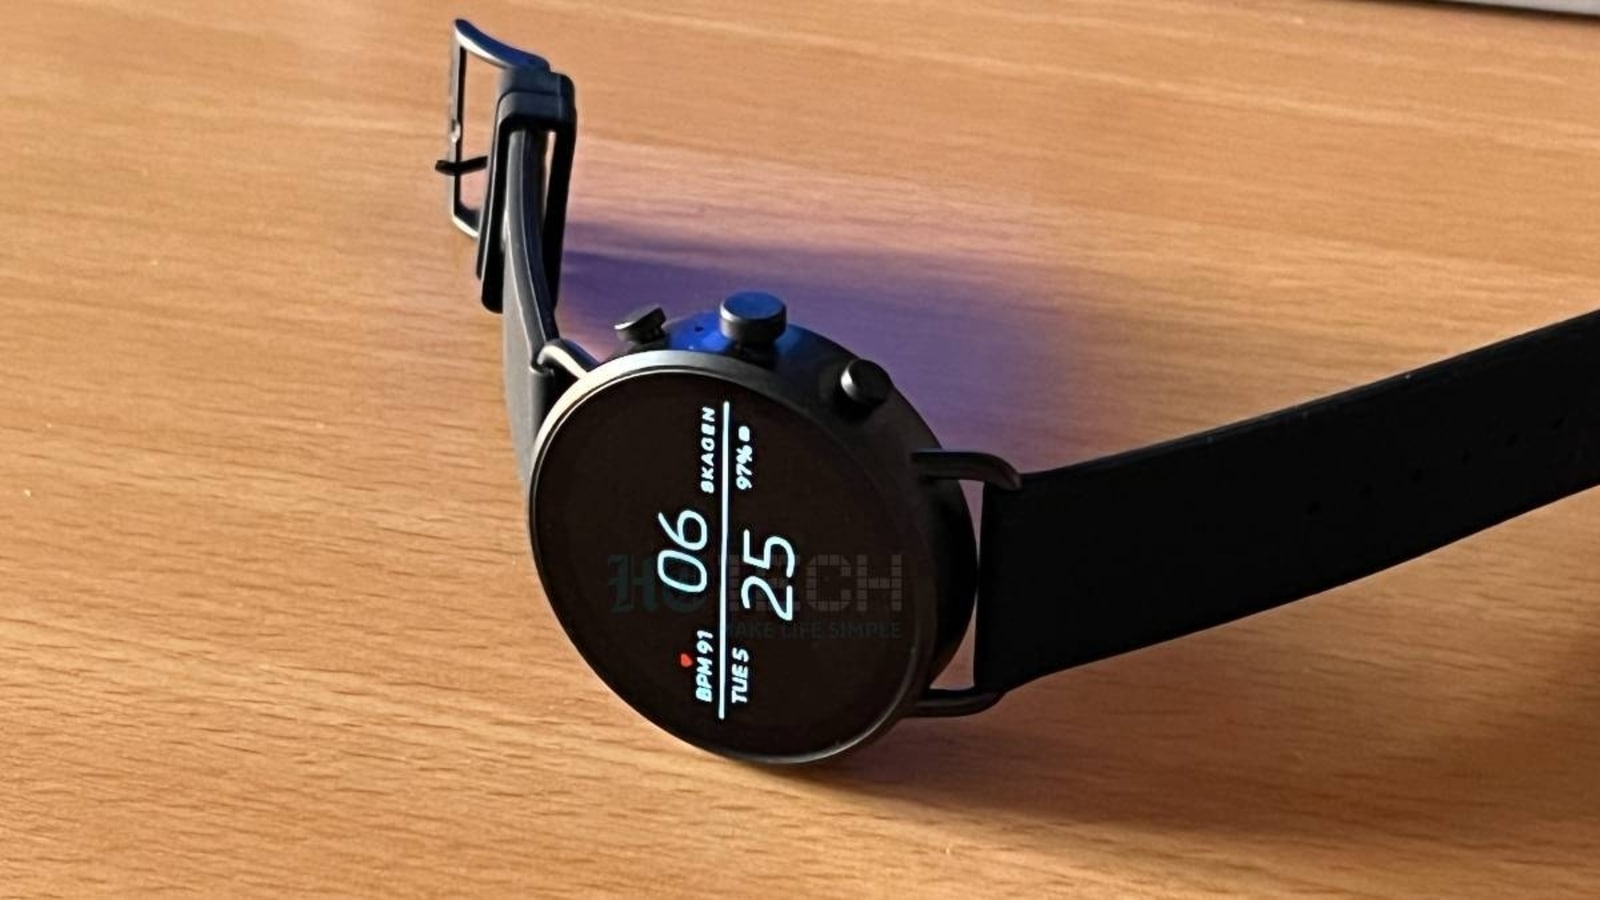 Skagen Falster Gen 6 smartwatch Review: Oh, you Beauty! | Wearables Reviews